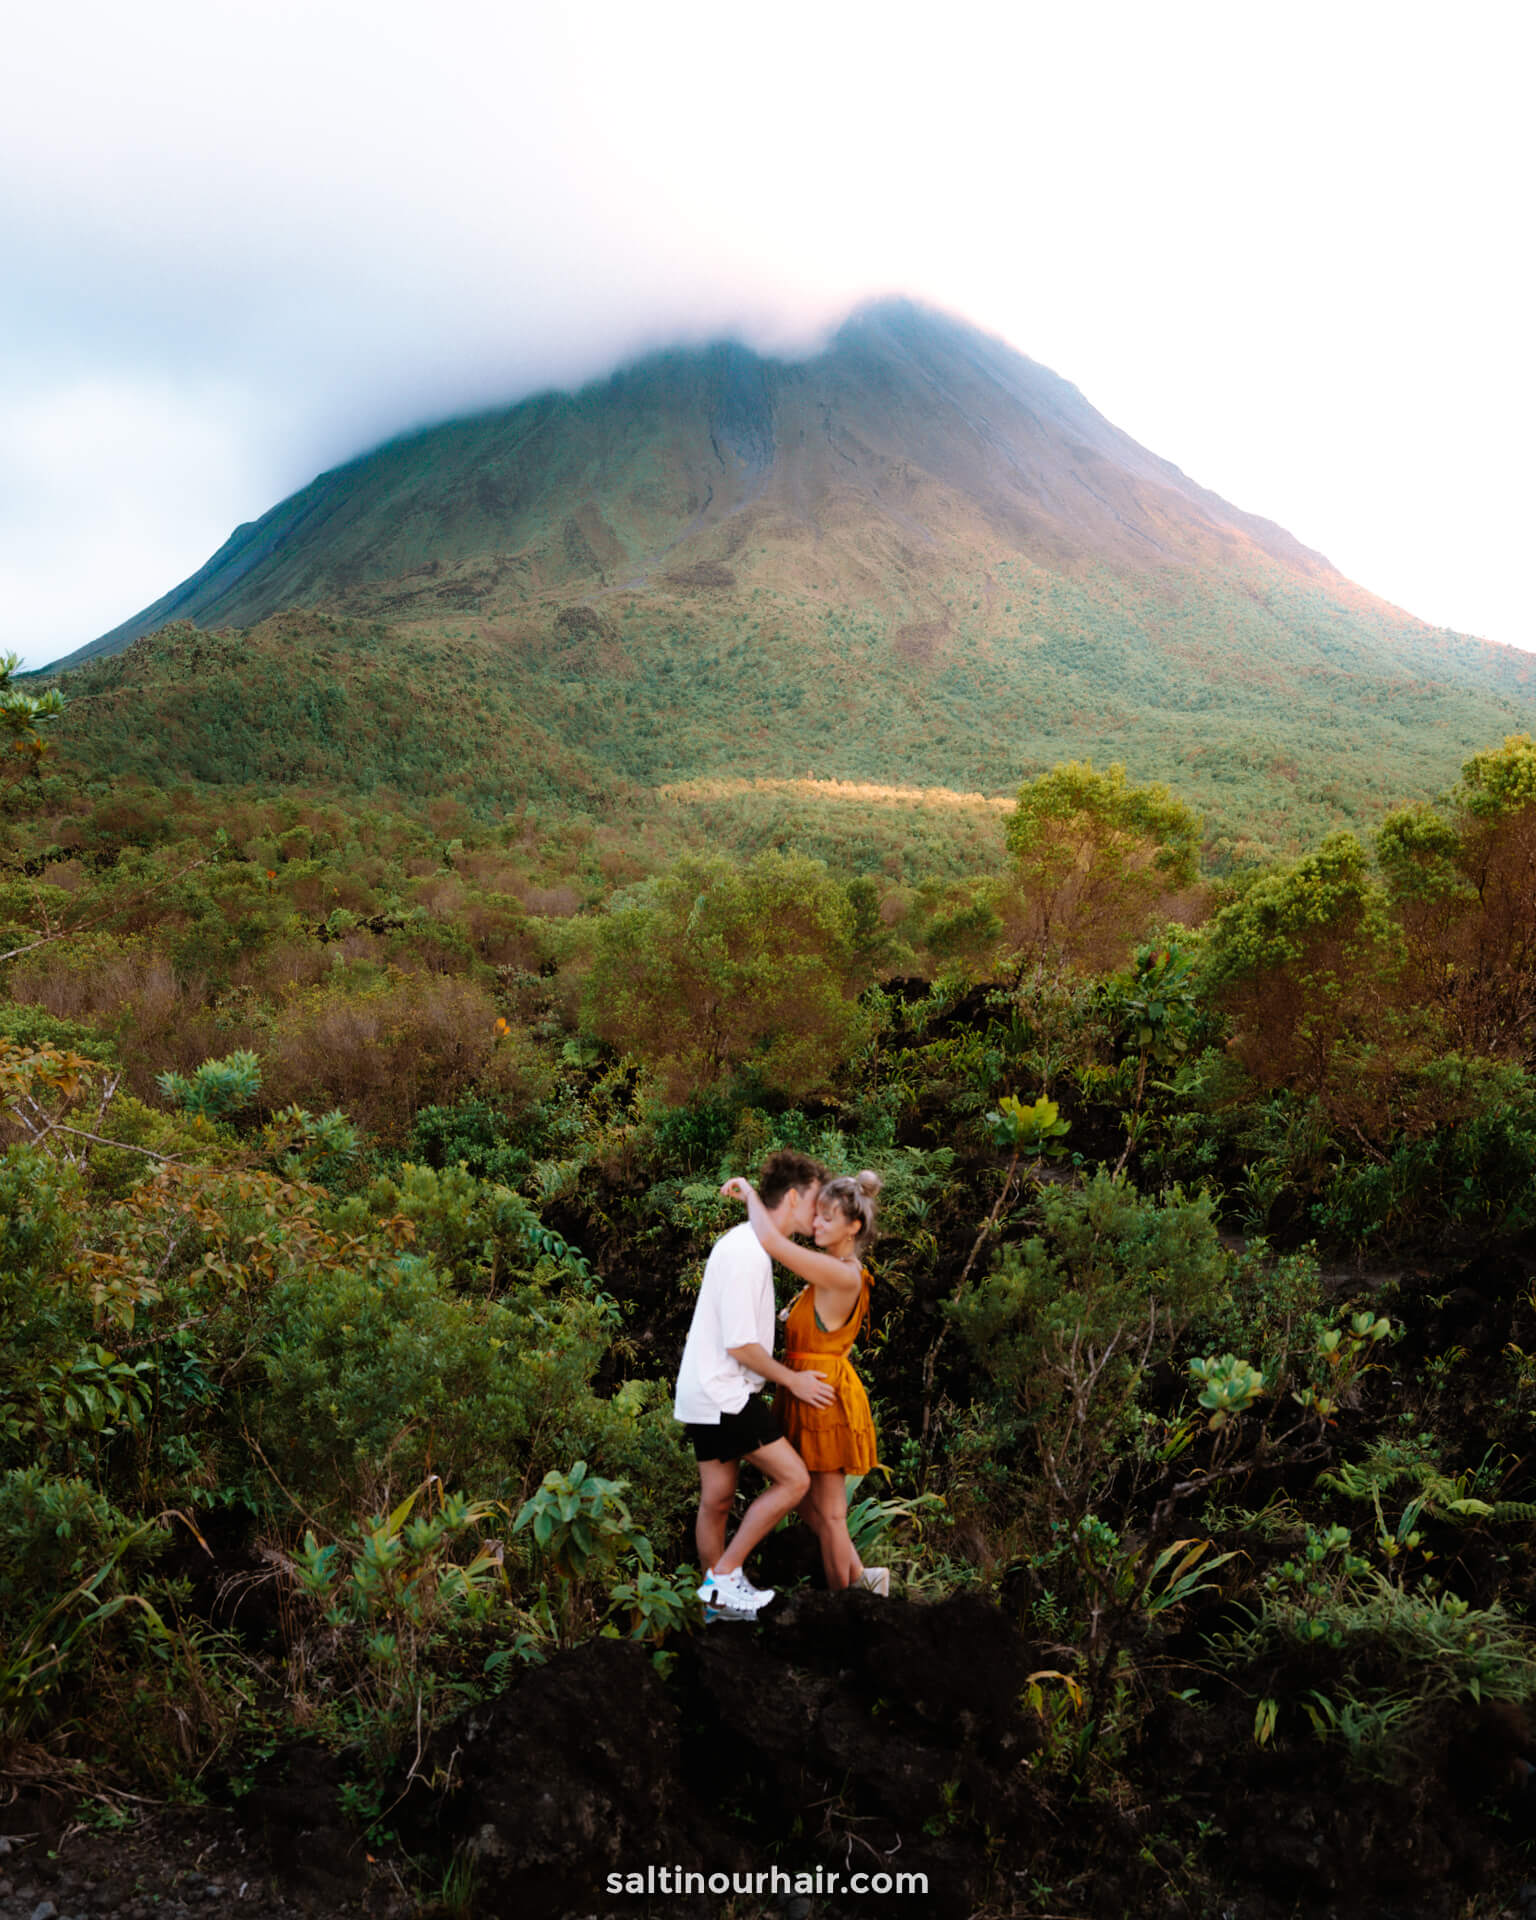 Costa Rica 3-weekse reisroute la fortuna arenal vulkaan